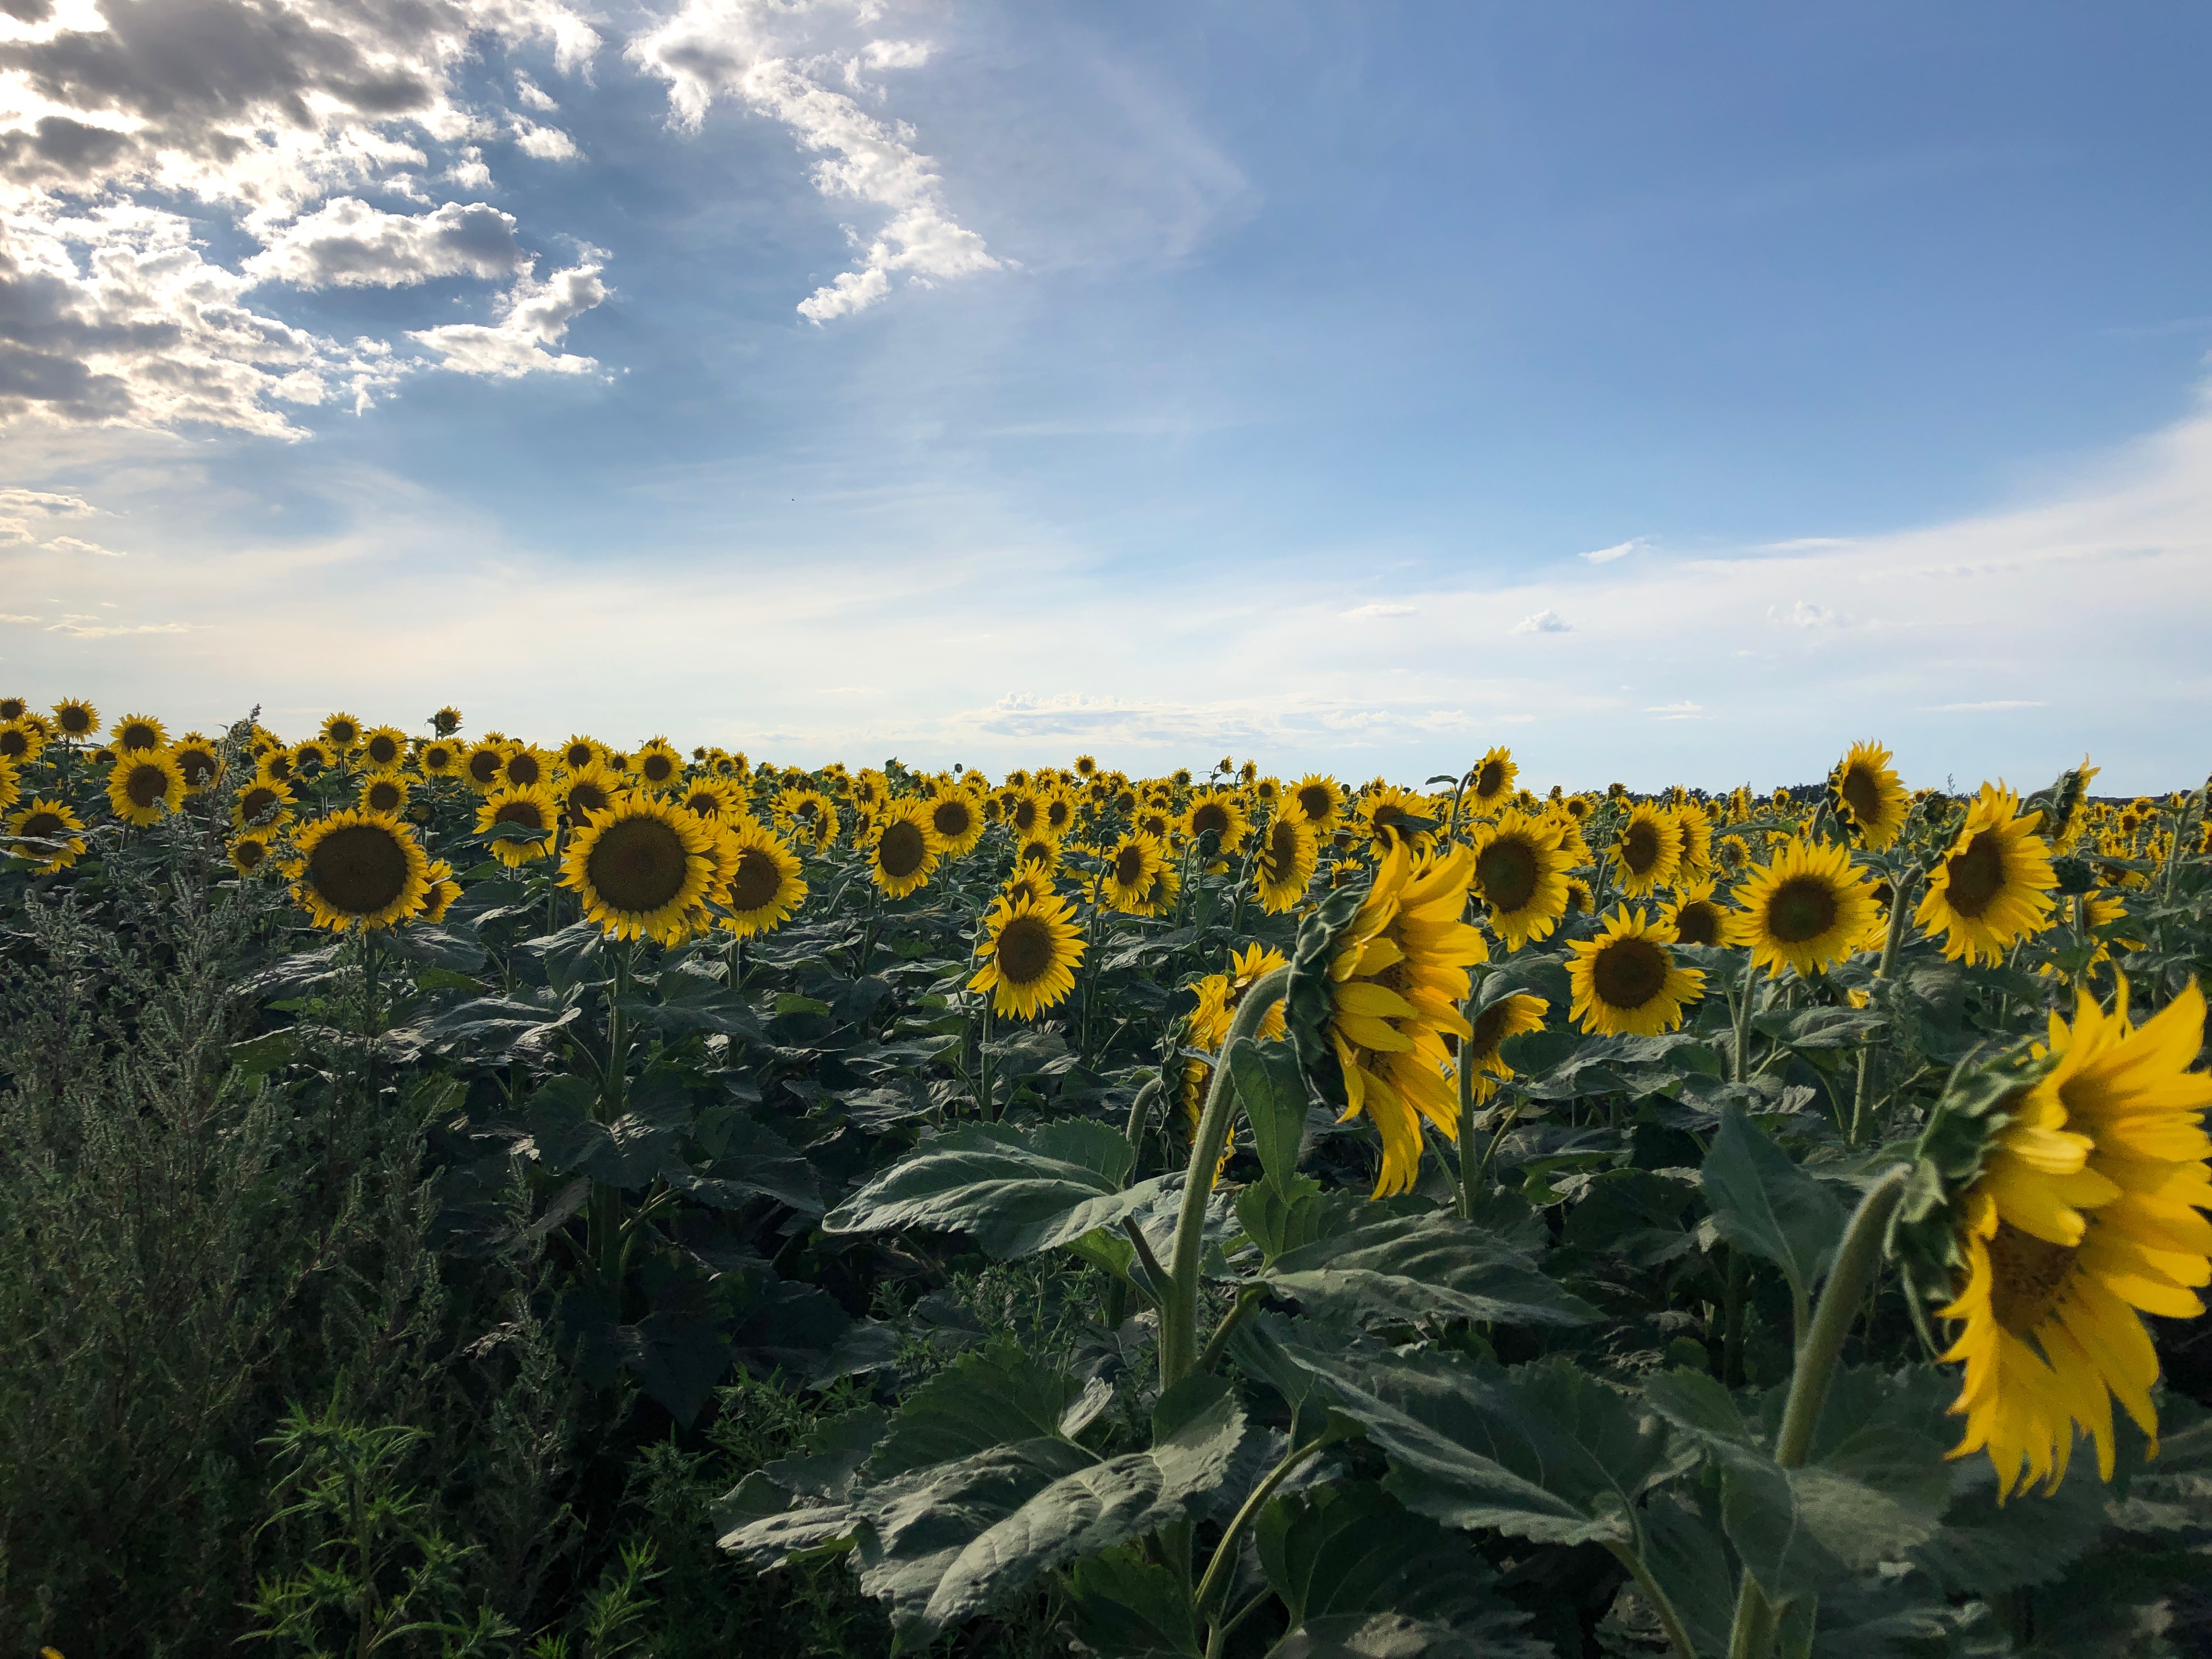 Morning Ag News, March 2, 2022: Ukraine's sunflower oil exports slow